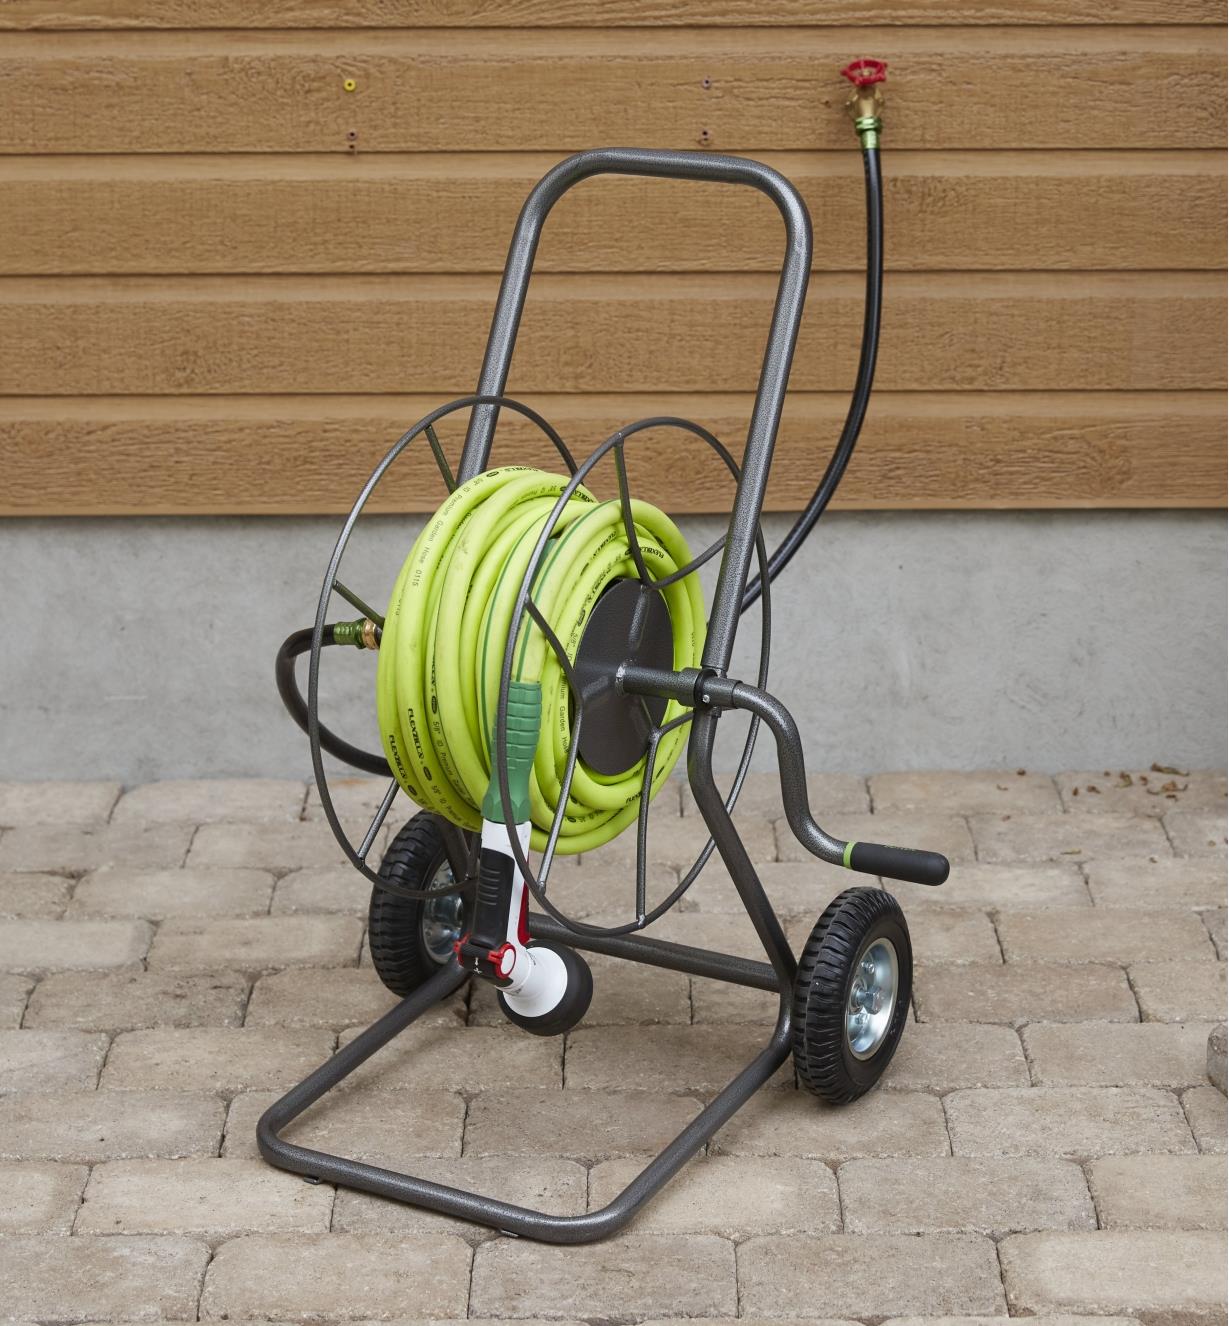 Hose reel cart holding garden hose with a sprayer on a patio